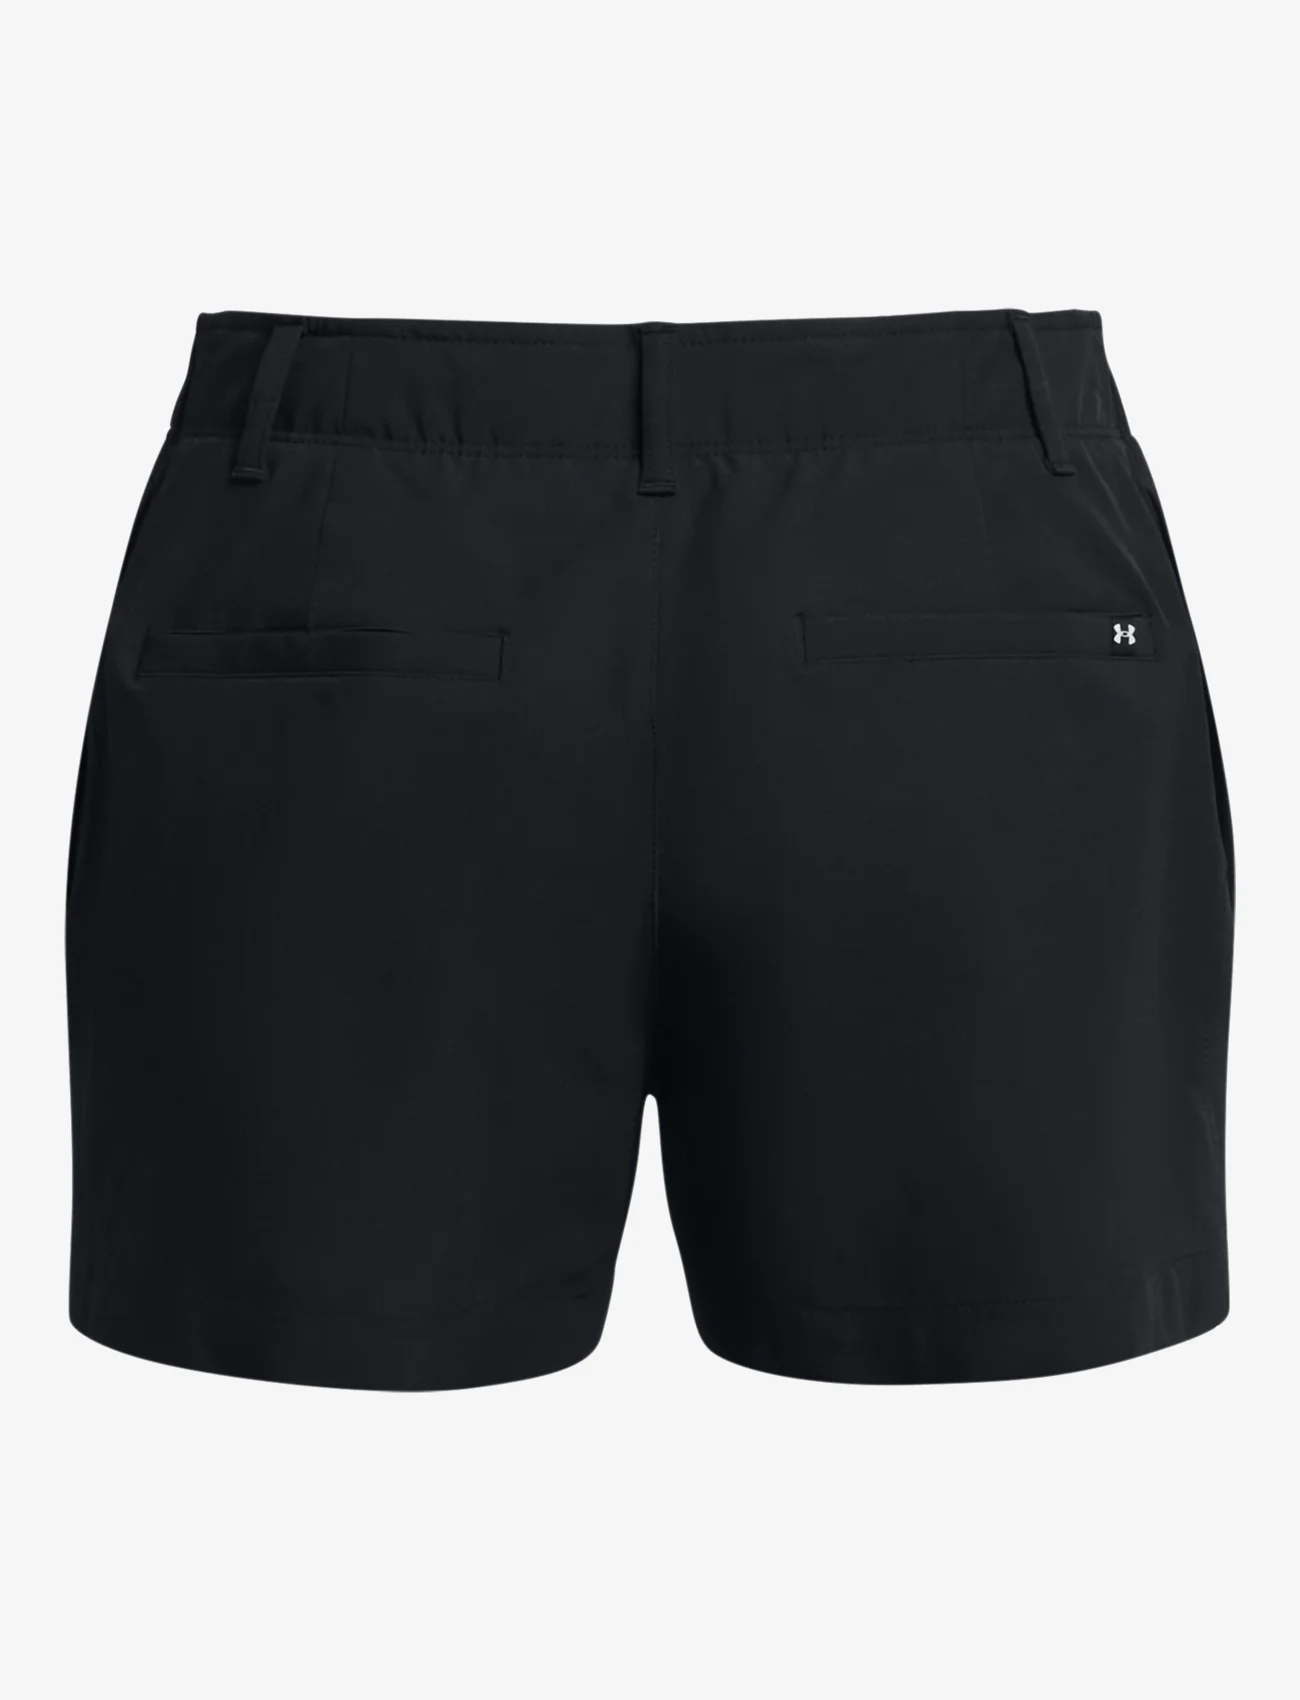 Under Armour - UA Drive 4" Short - sports shorts - black - 1